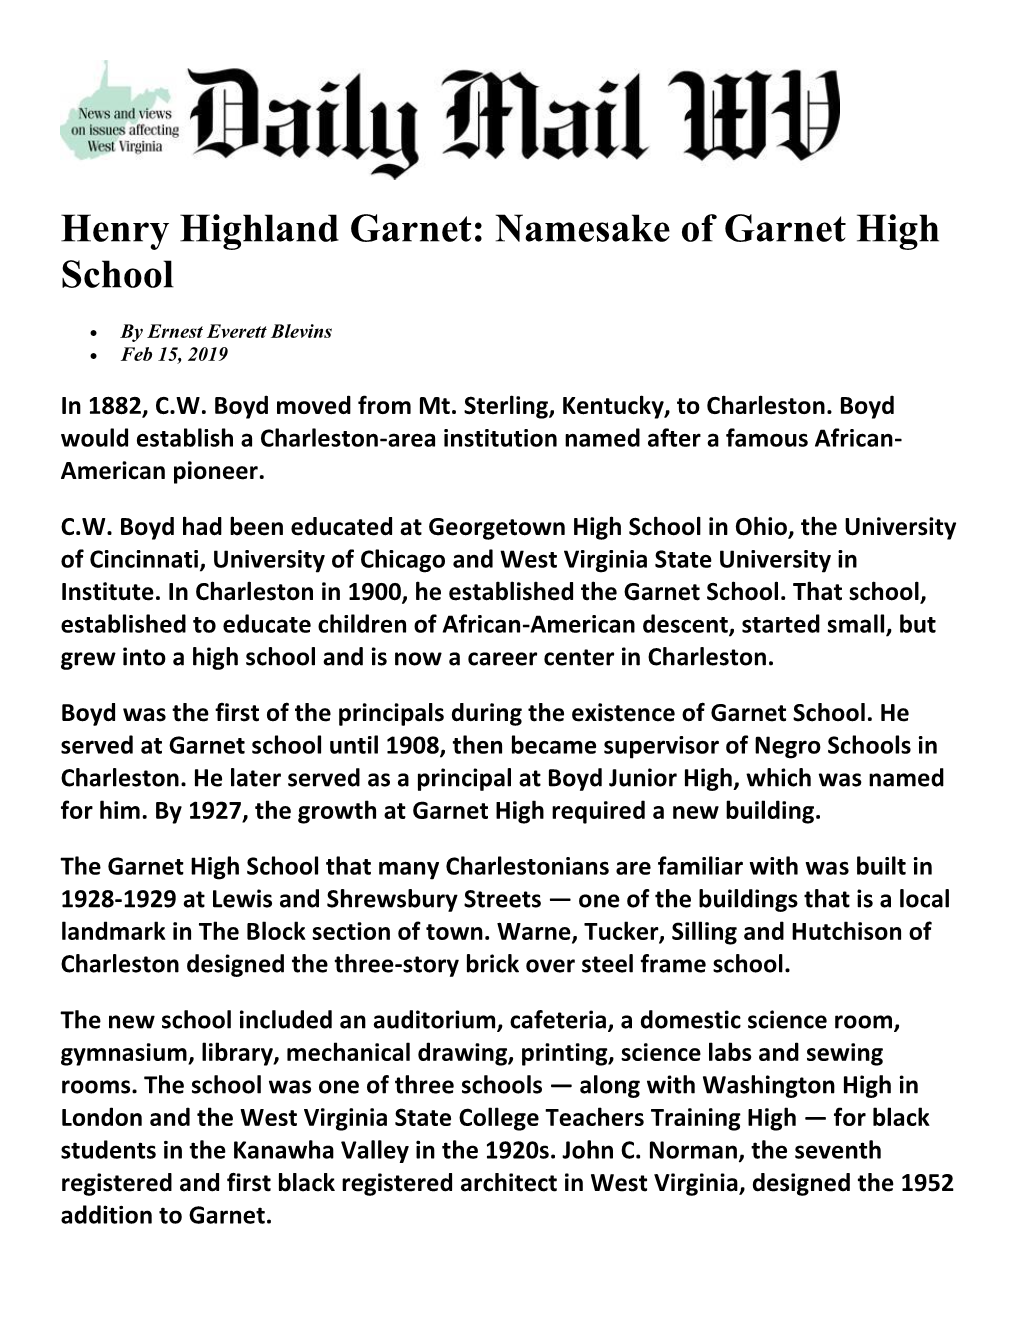 Henry Highland Garnet: Namesake of Garnet High School